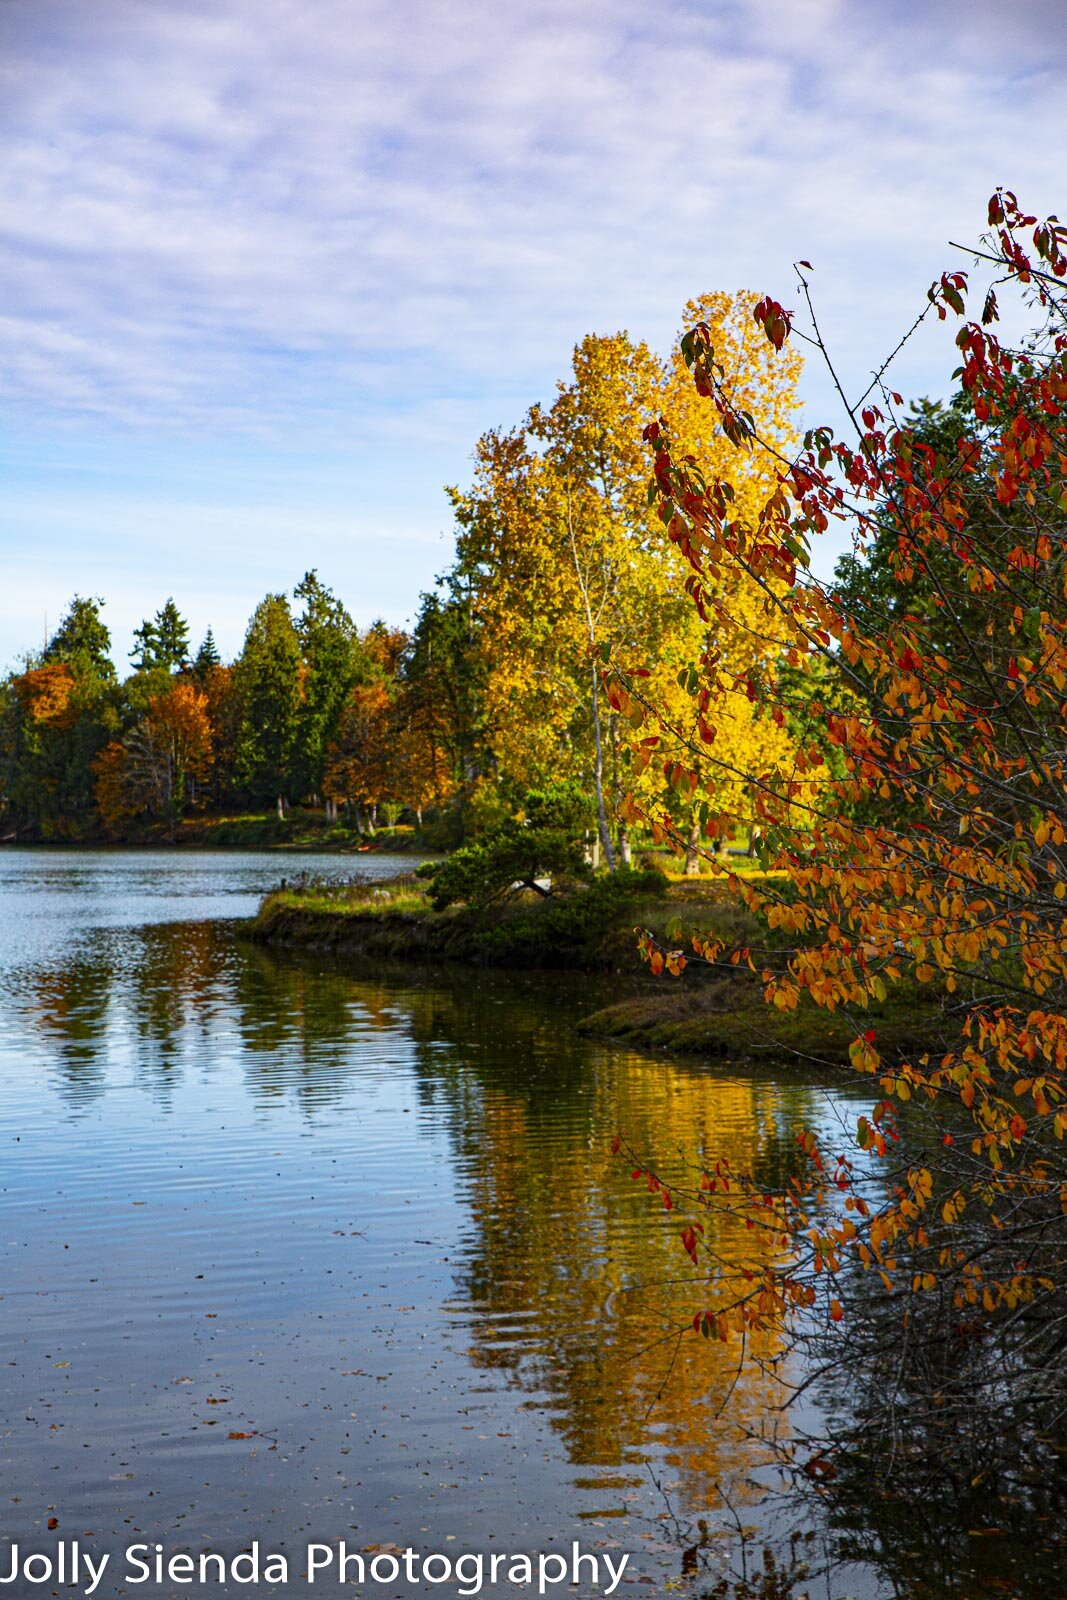 Autumn foliage on around the lake and reflection